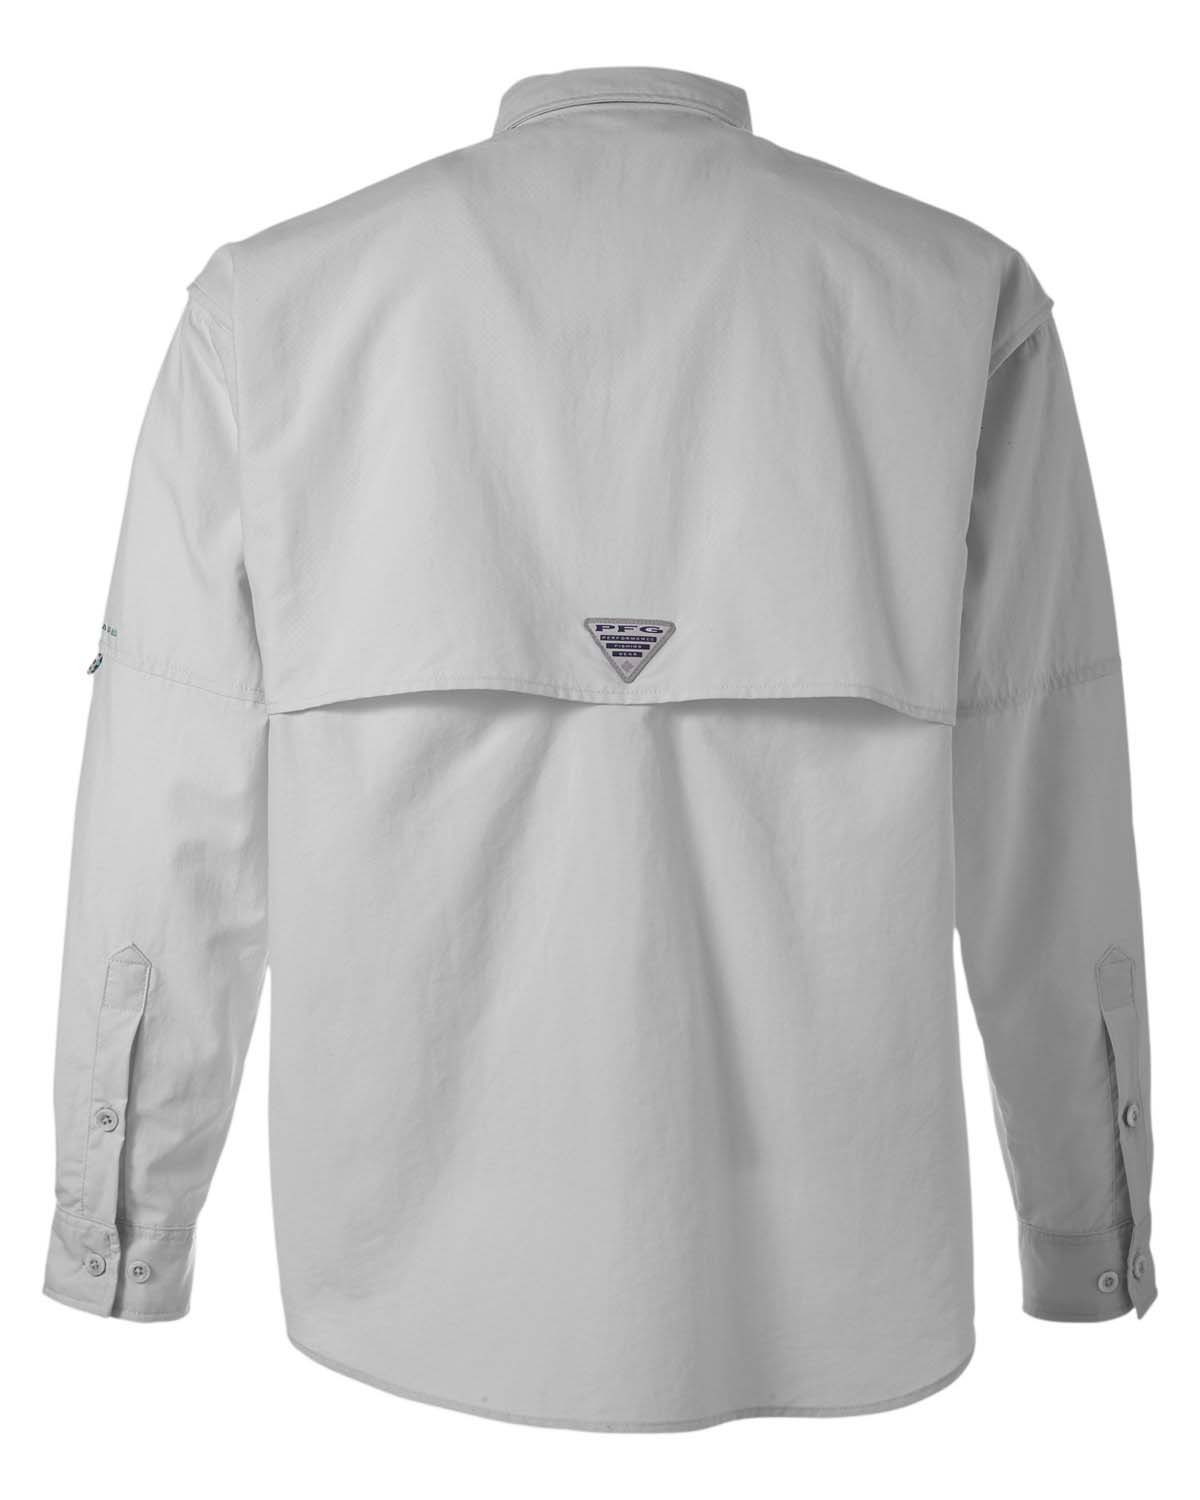  Columbia Men's Bahama II Long Sleeve Shirt, White